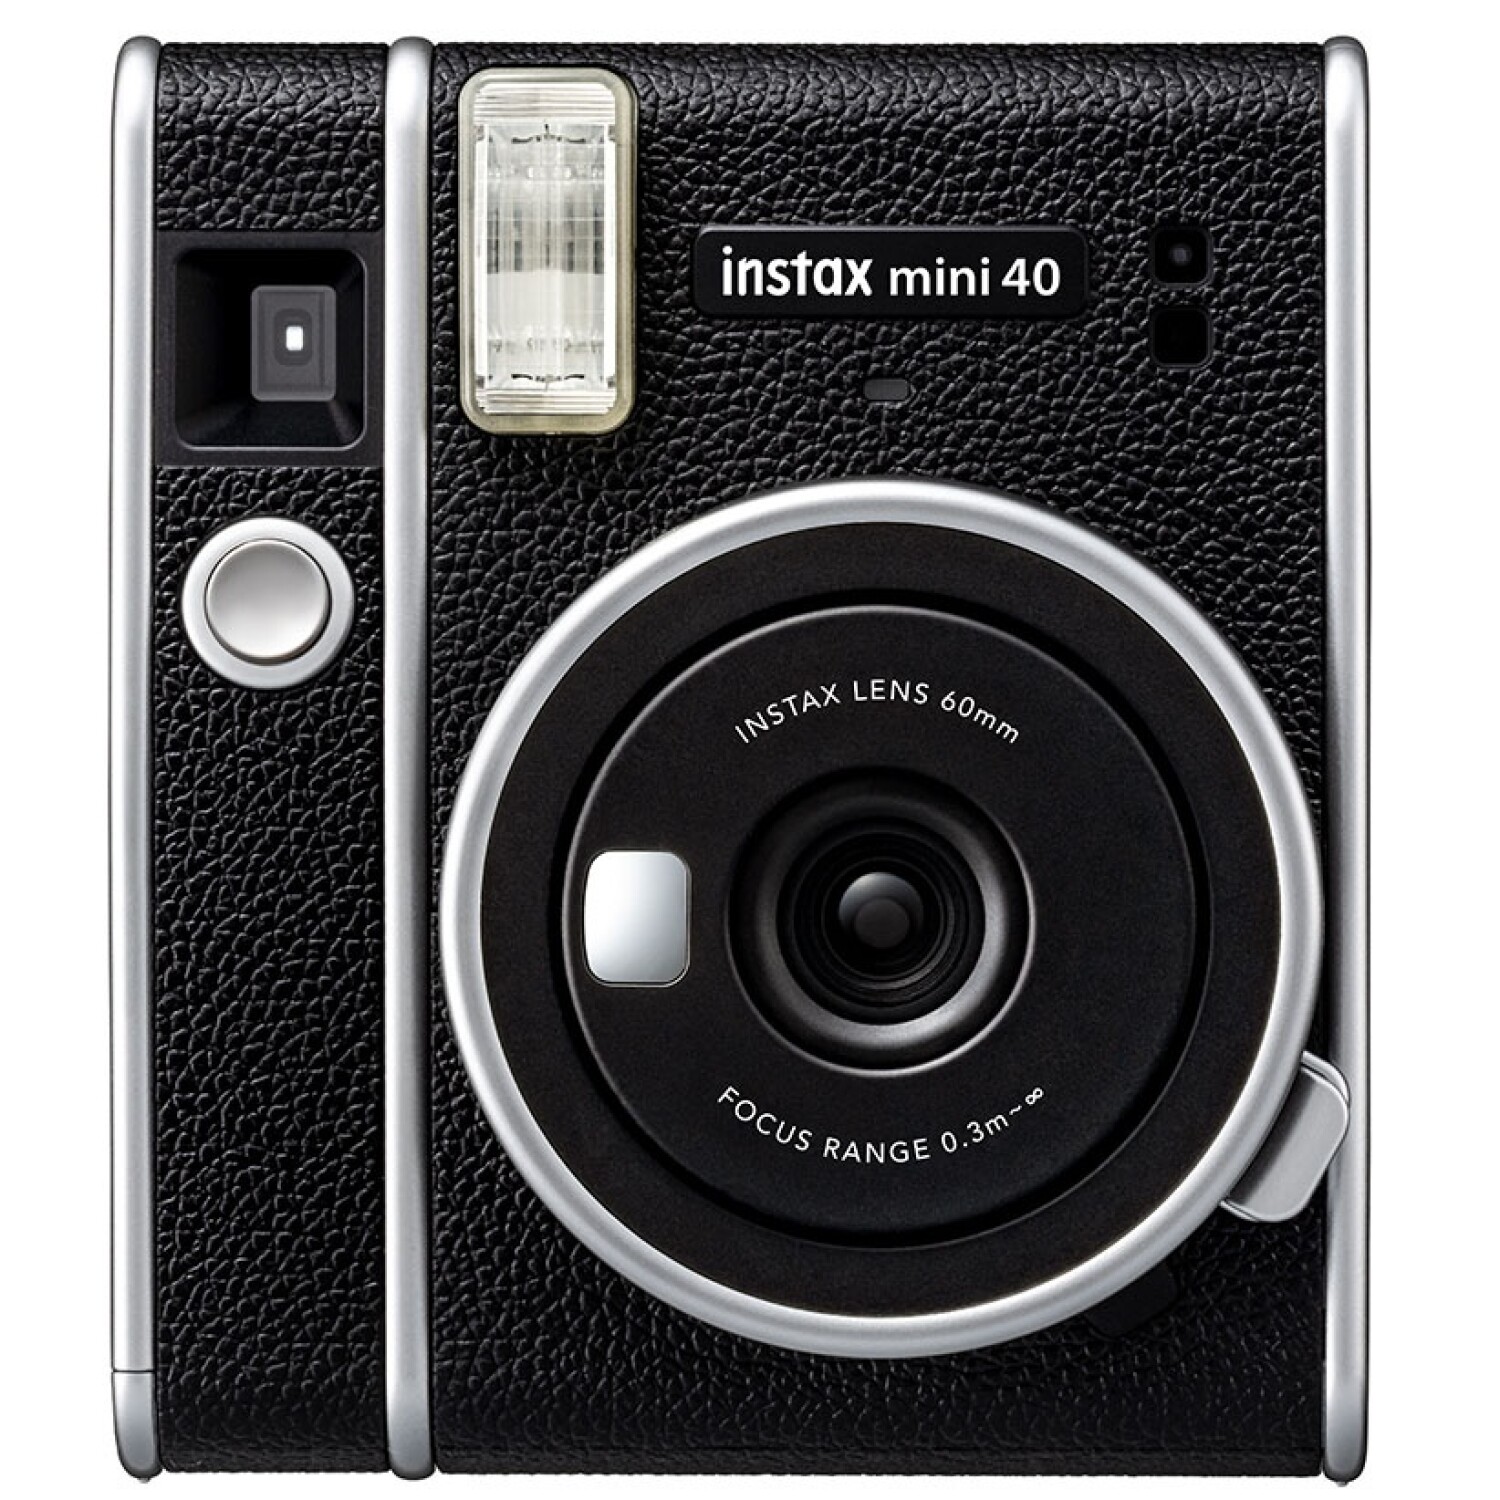 Cámara instantánea Fujifilm Instax Mini 12 Violeta - Cámara de